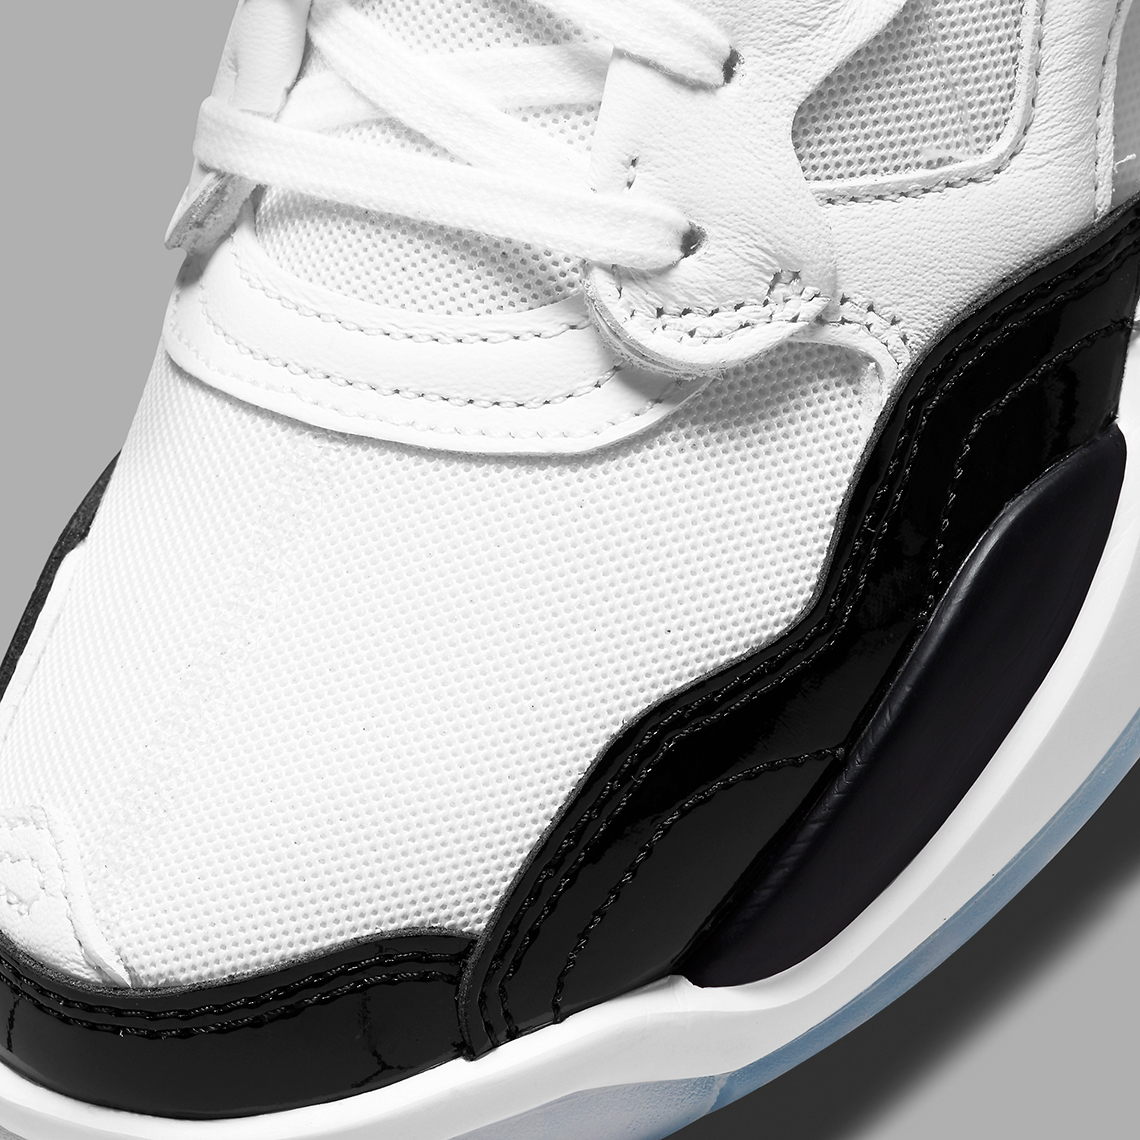 Jordan MA2 Concord CV8122-105 Release Info | SneakerNews.com